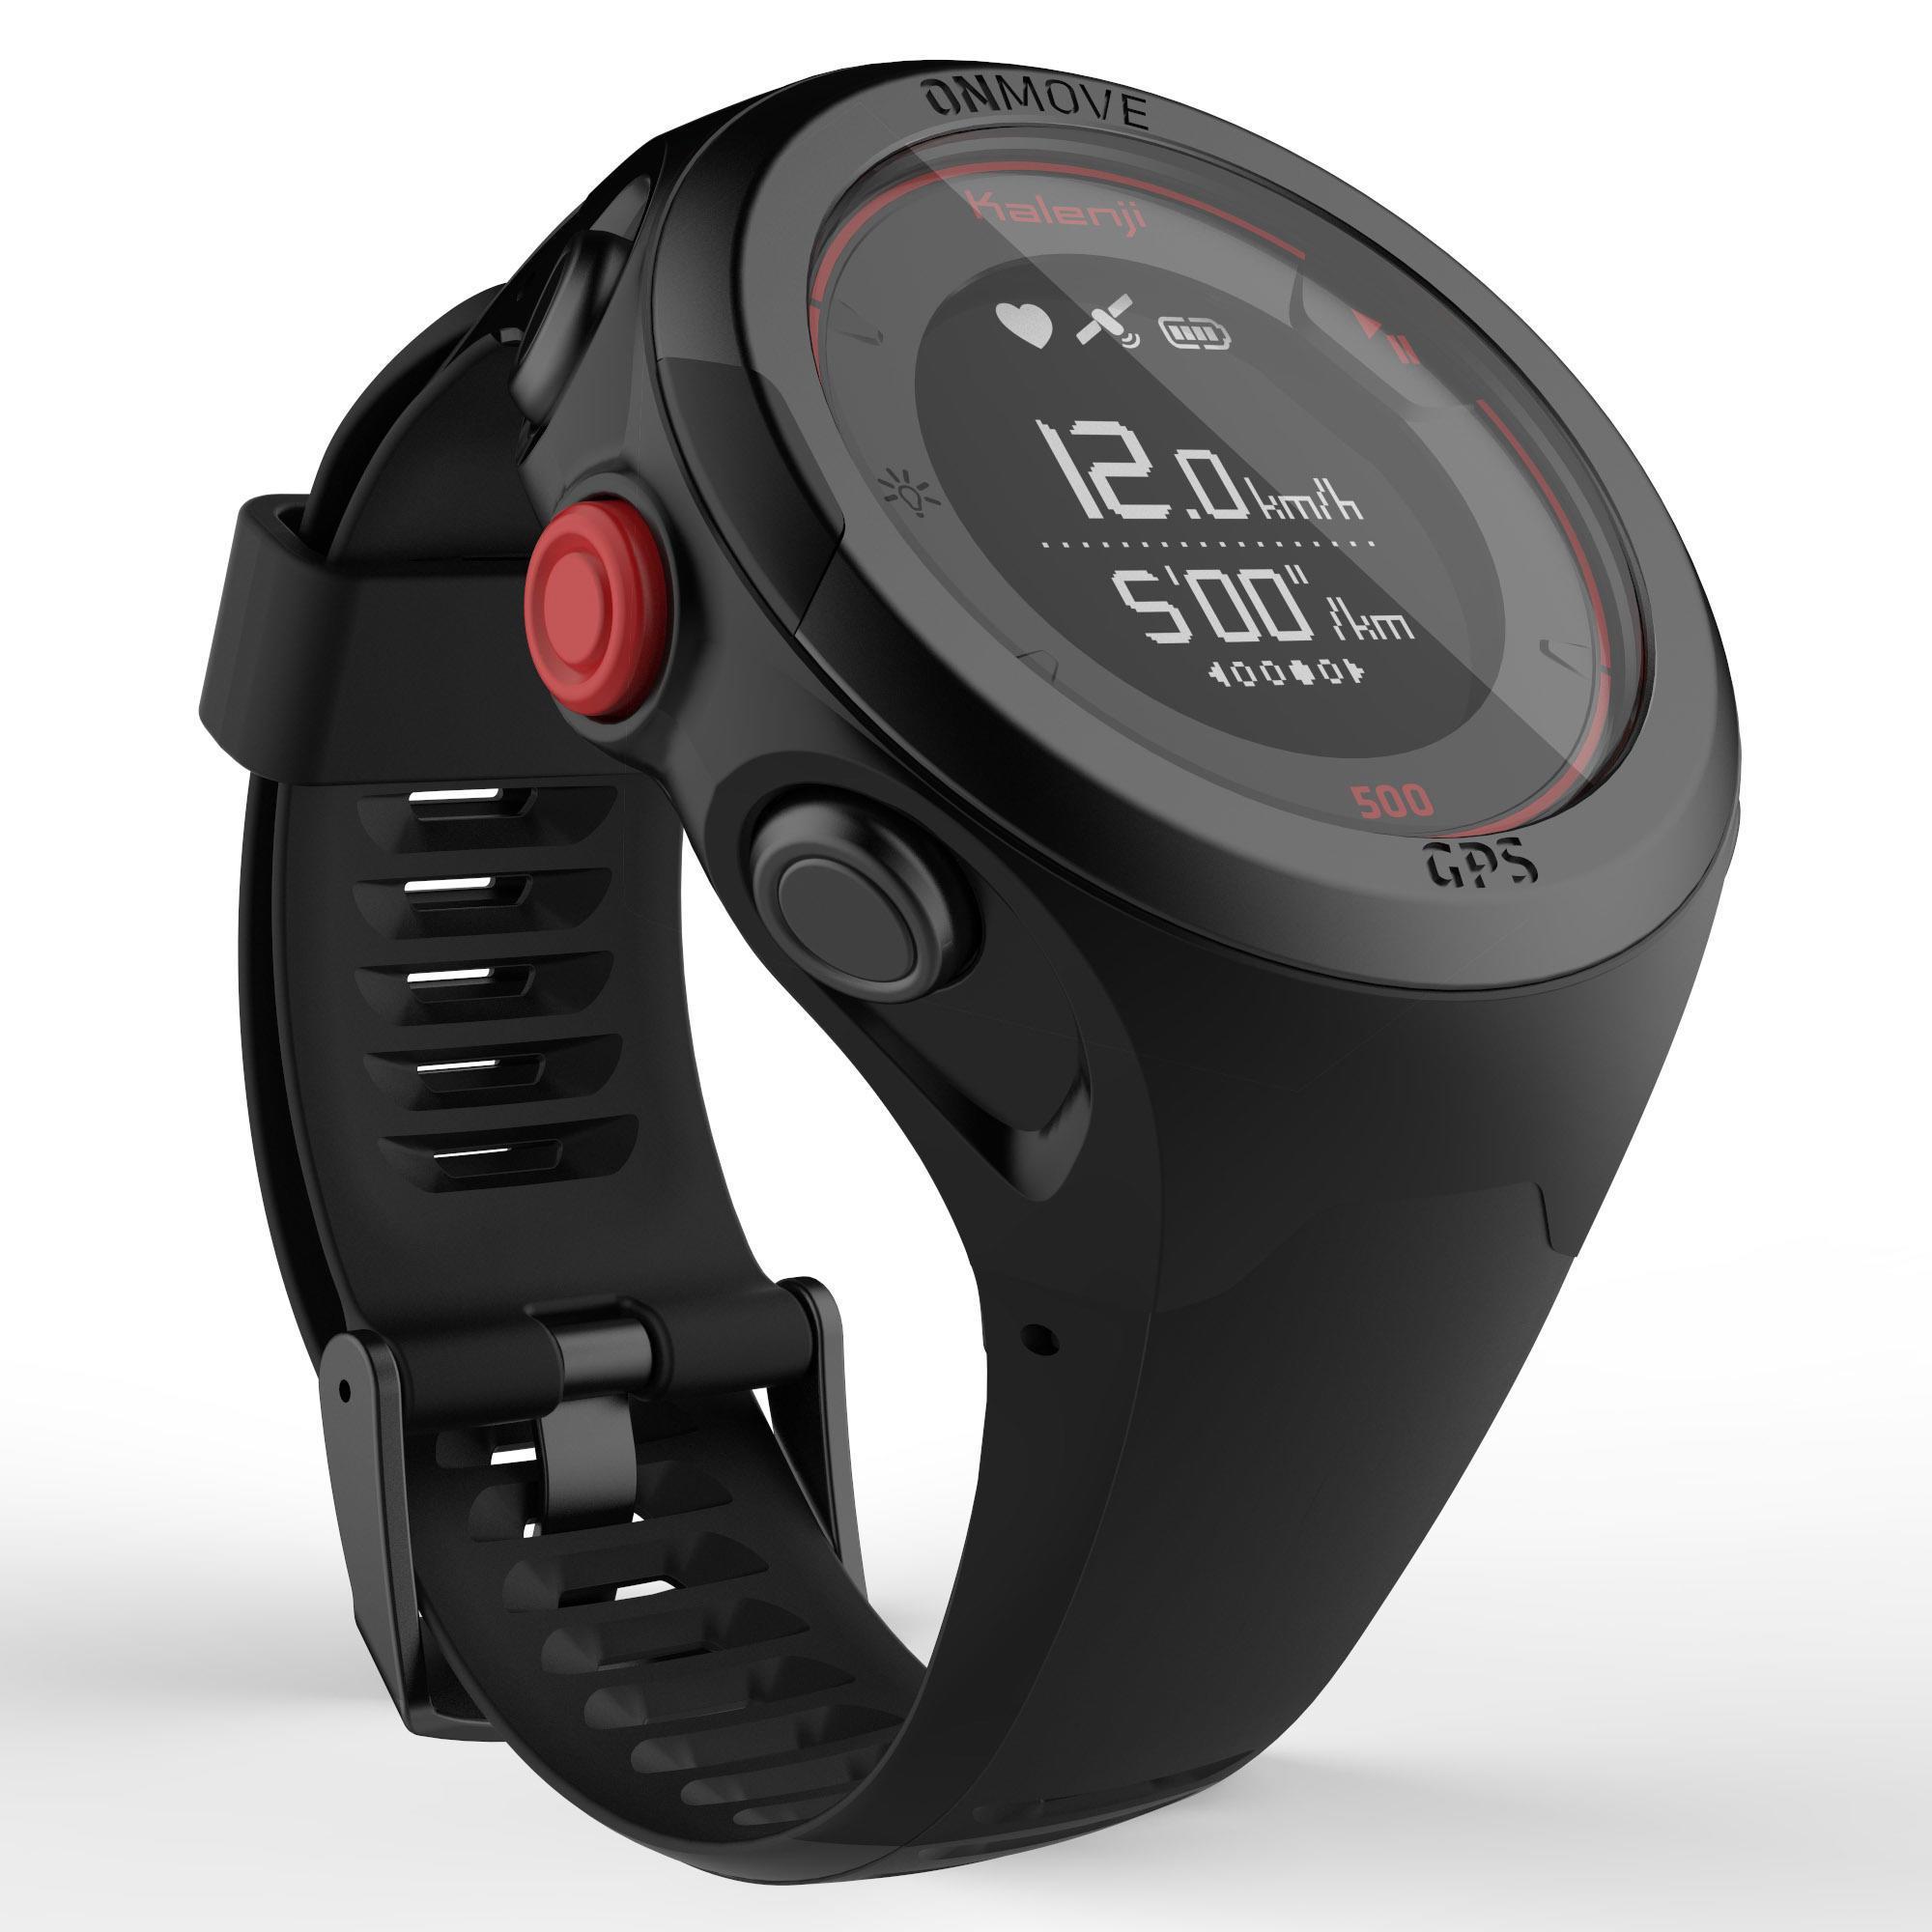 ONmove 500 GPS running watch and wrist 